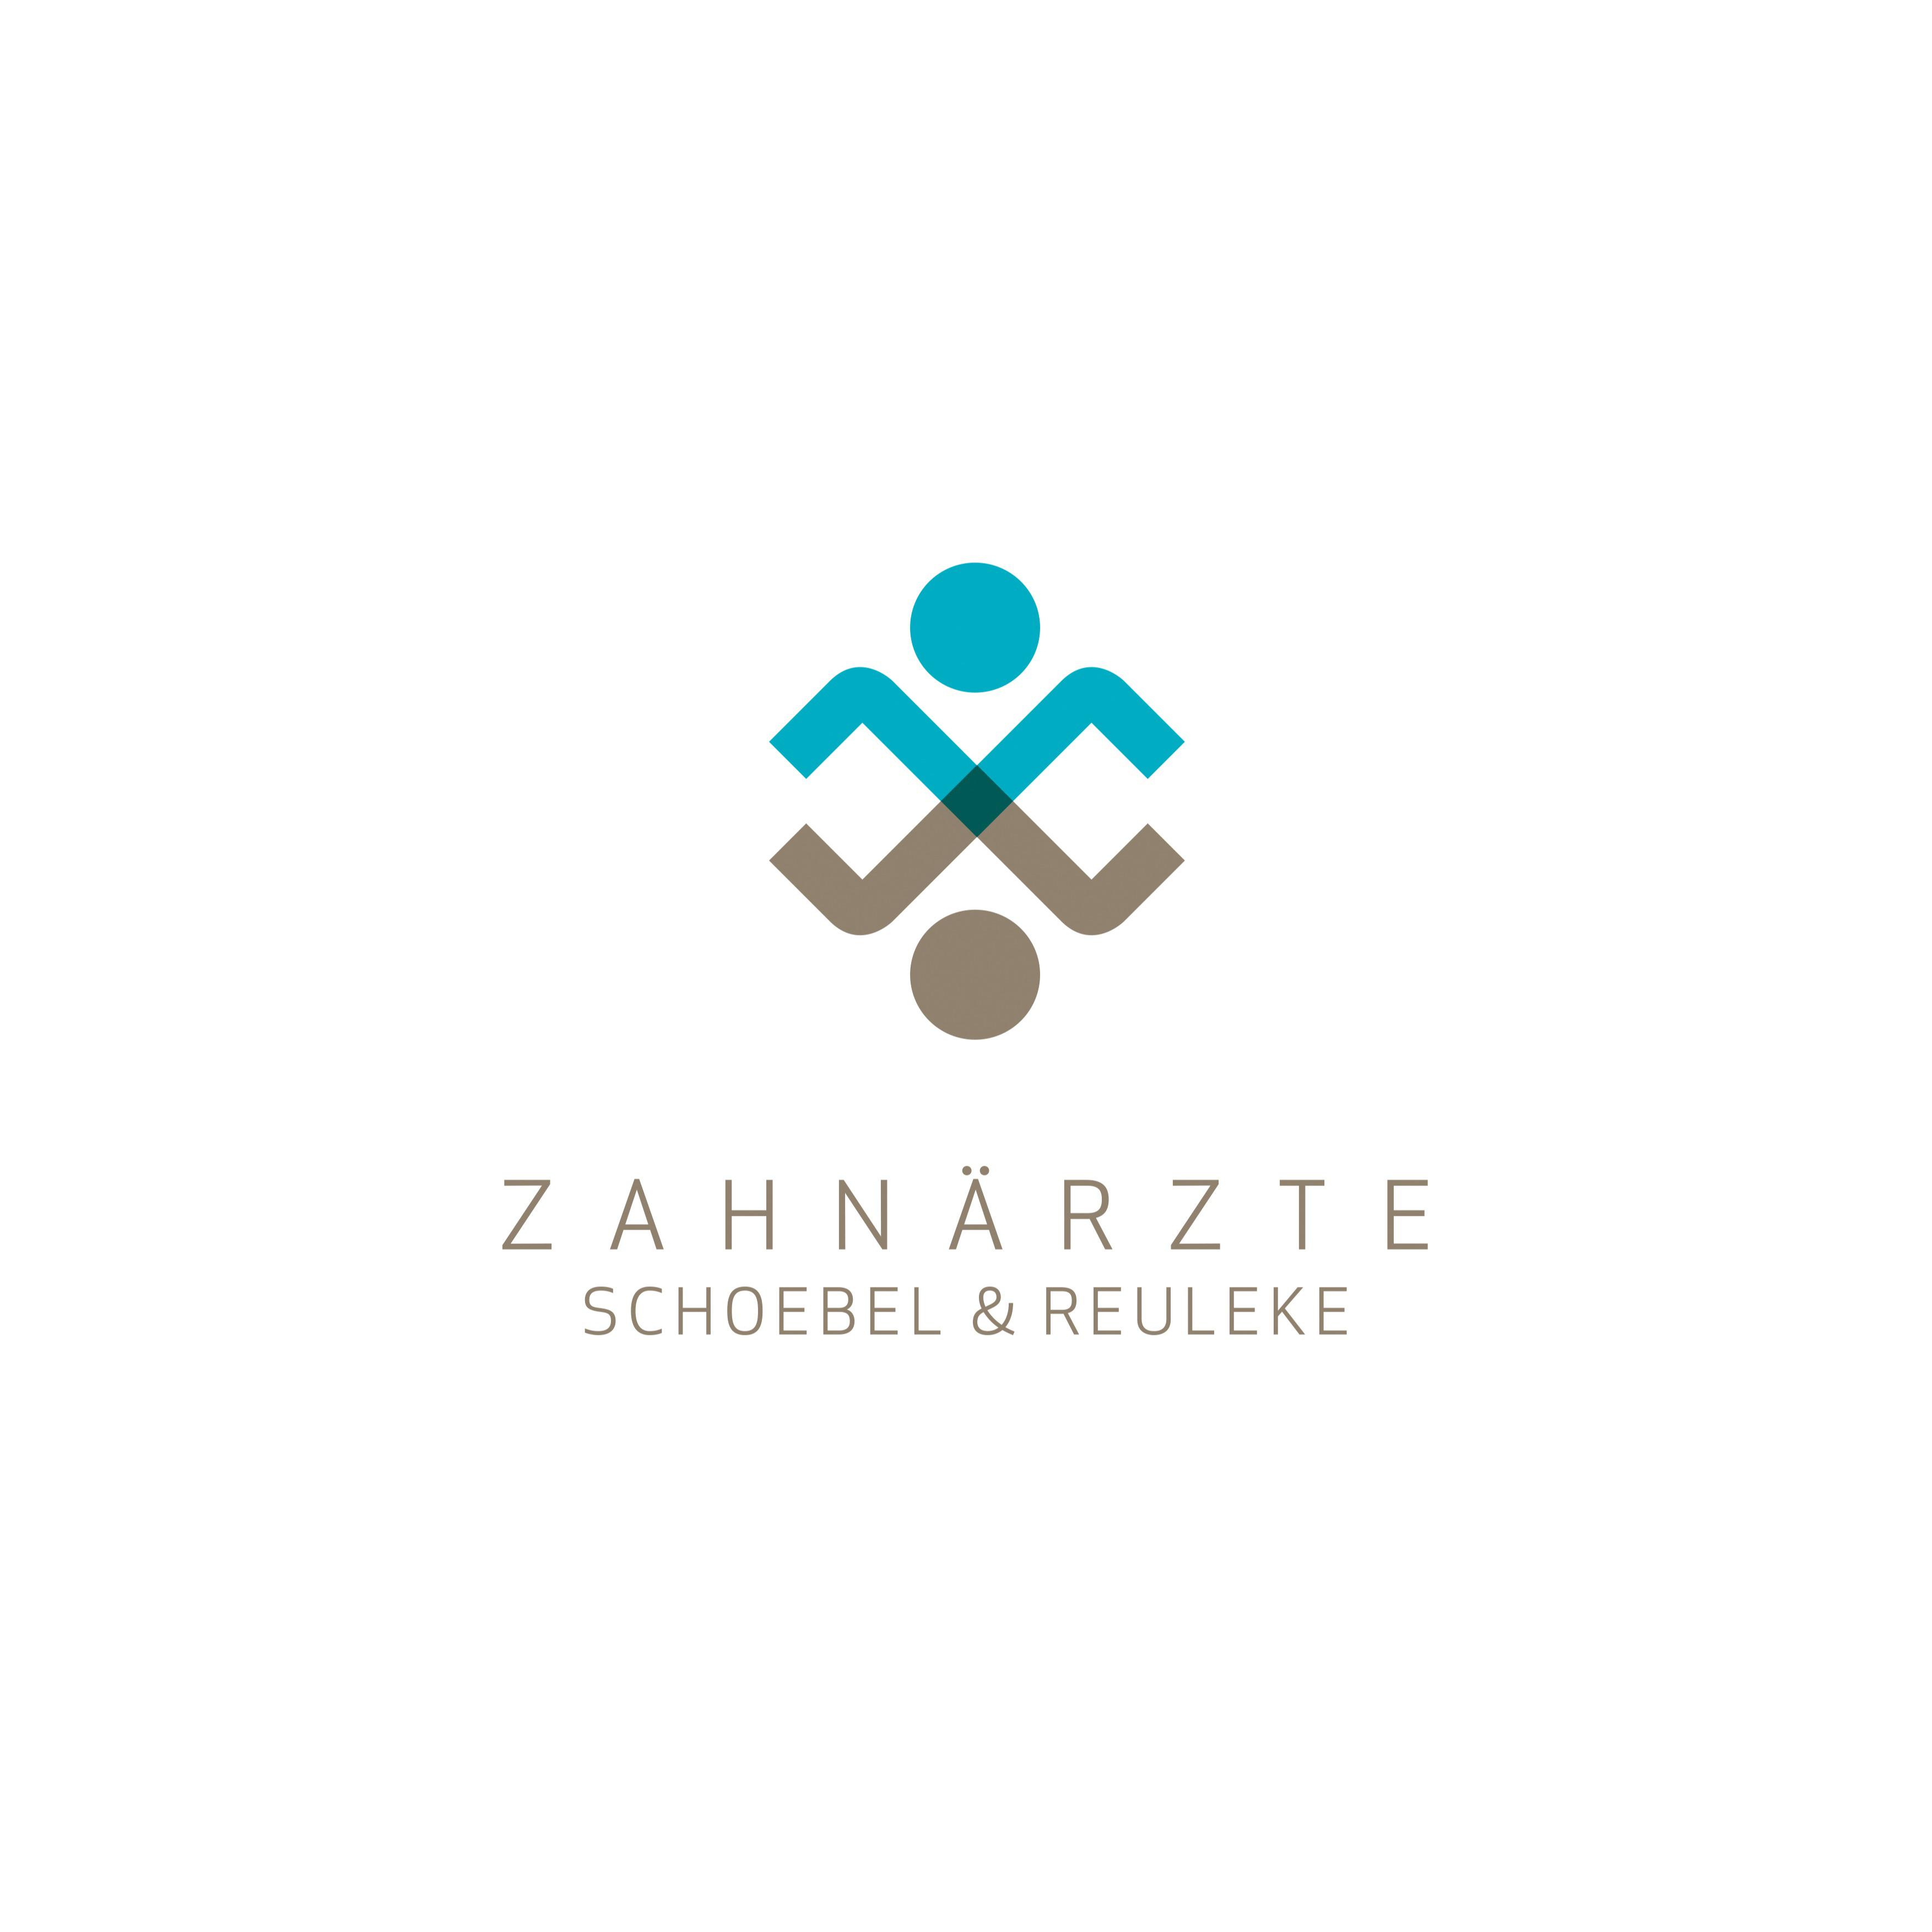 Zahnarztpraxis Schoebel & Reuleke | Zahnarzt Hannover Logo